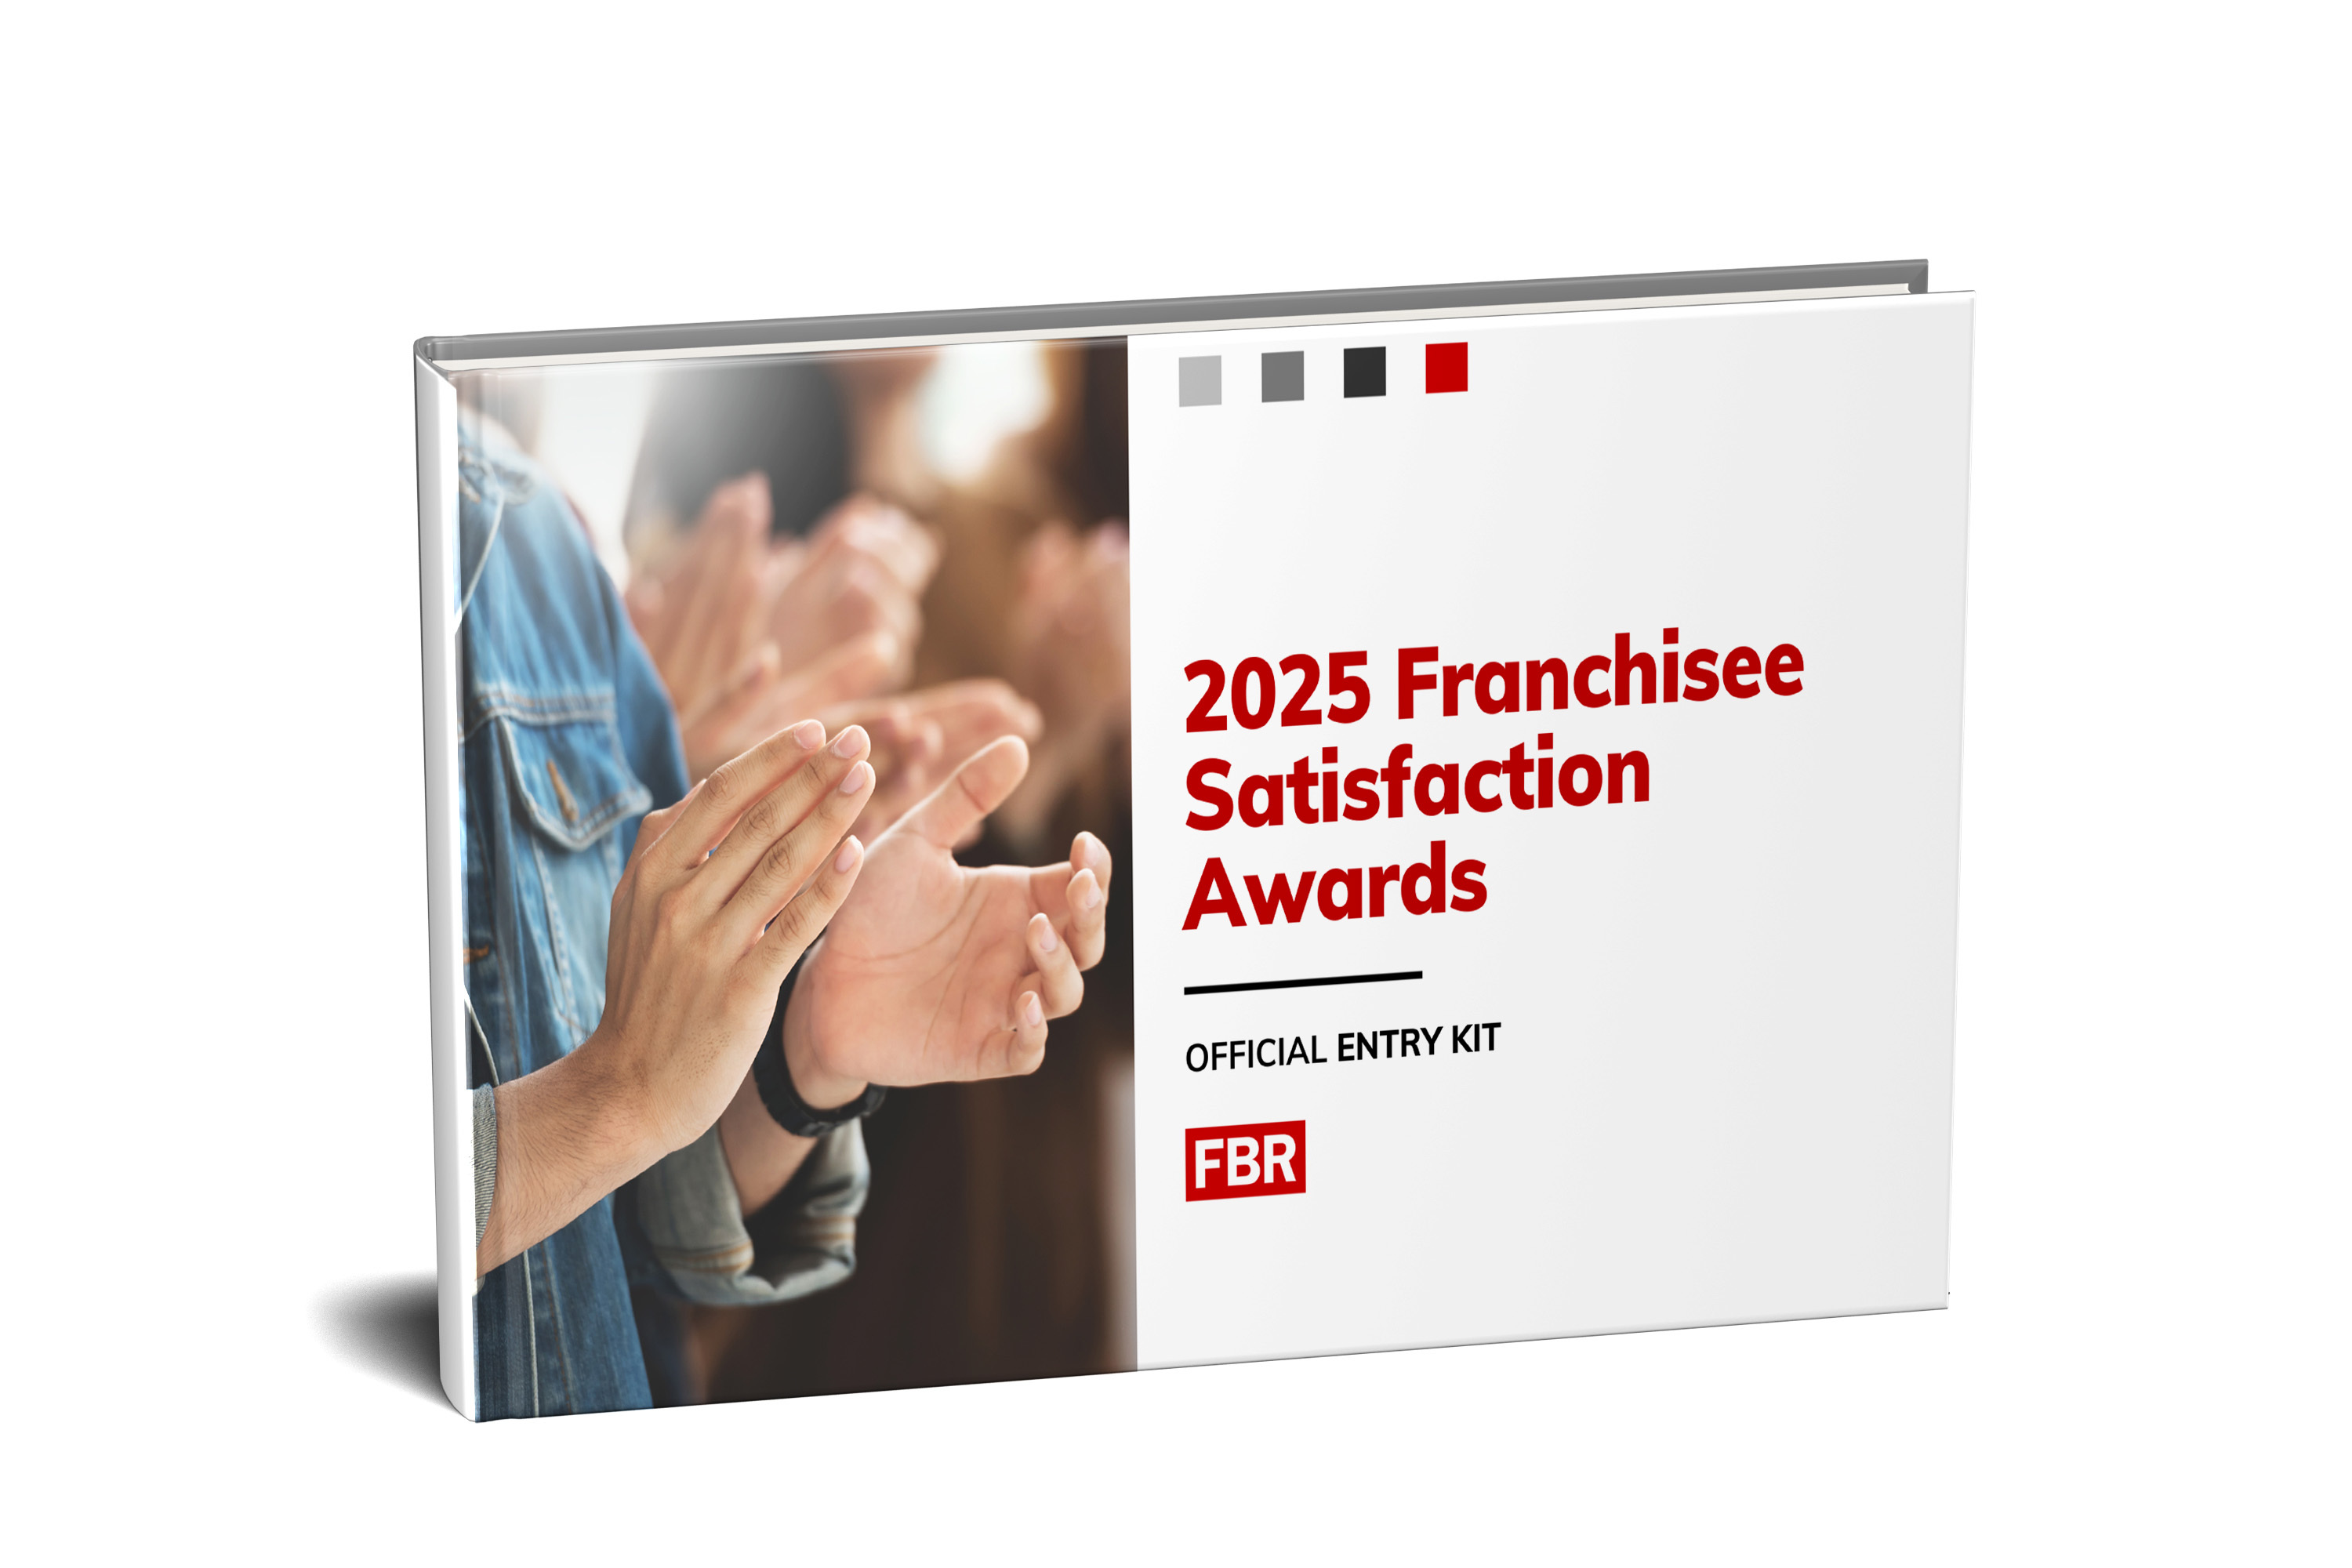 Franchisee Satisfaction Awards Entry Kit